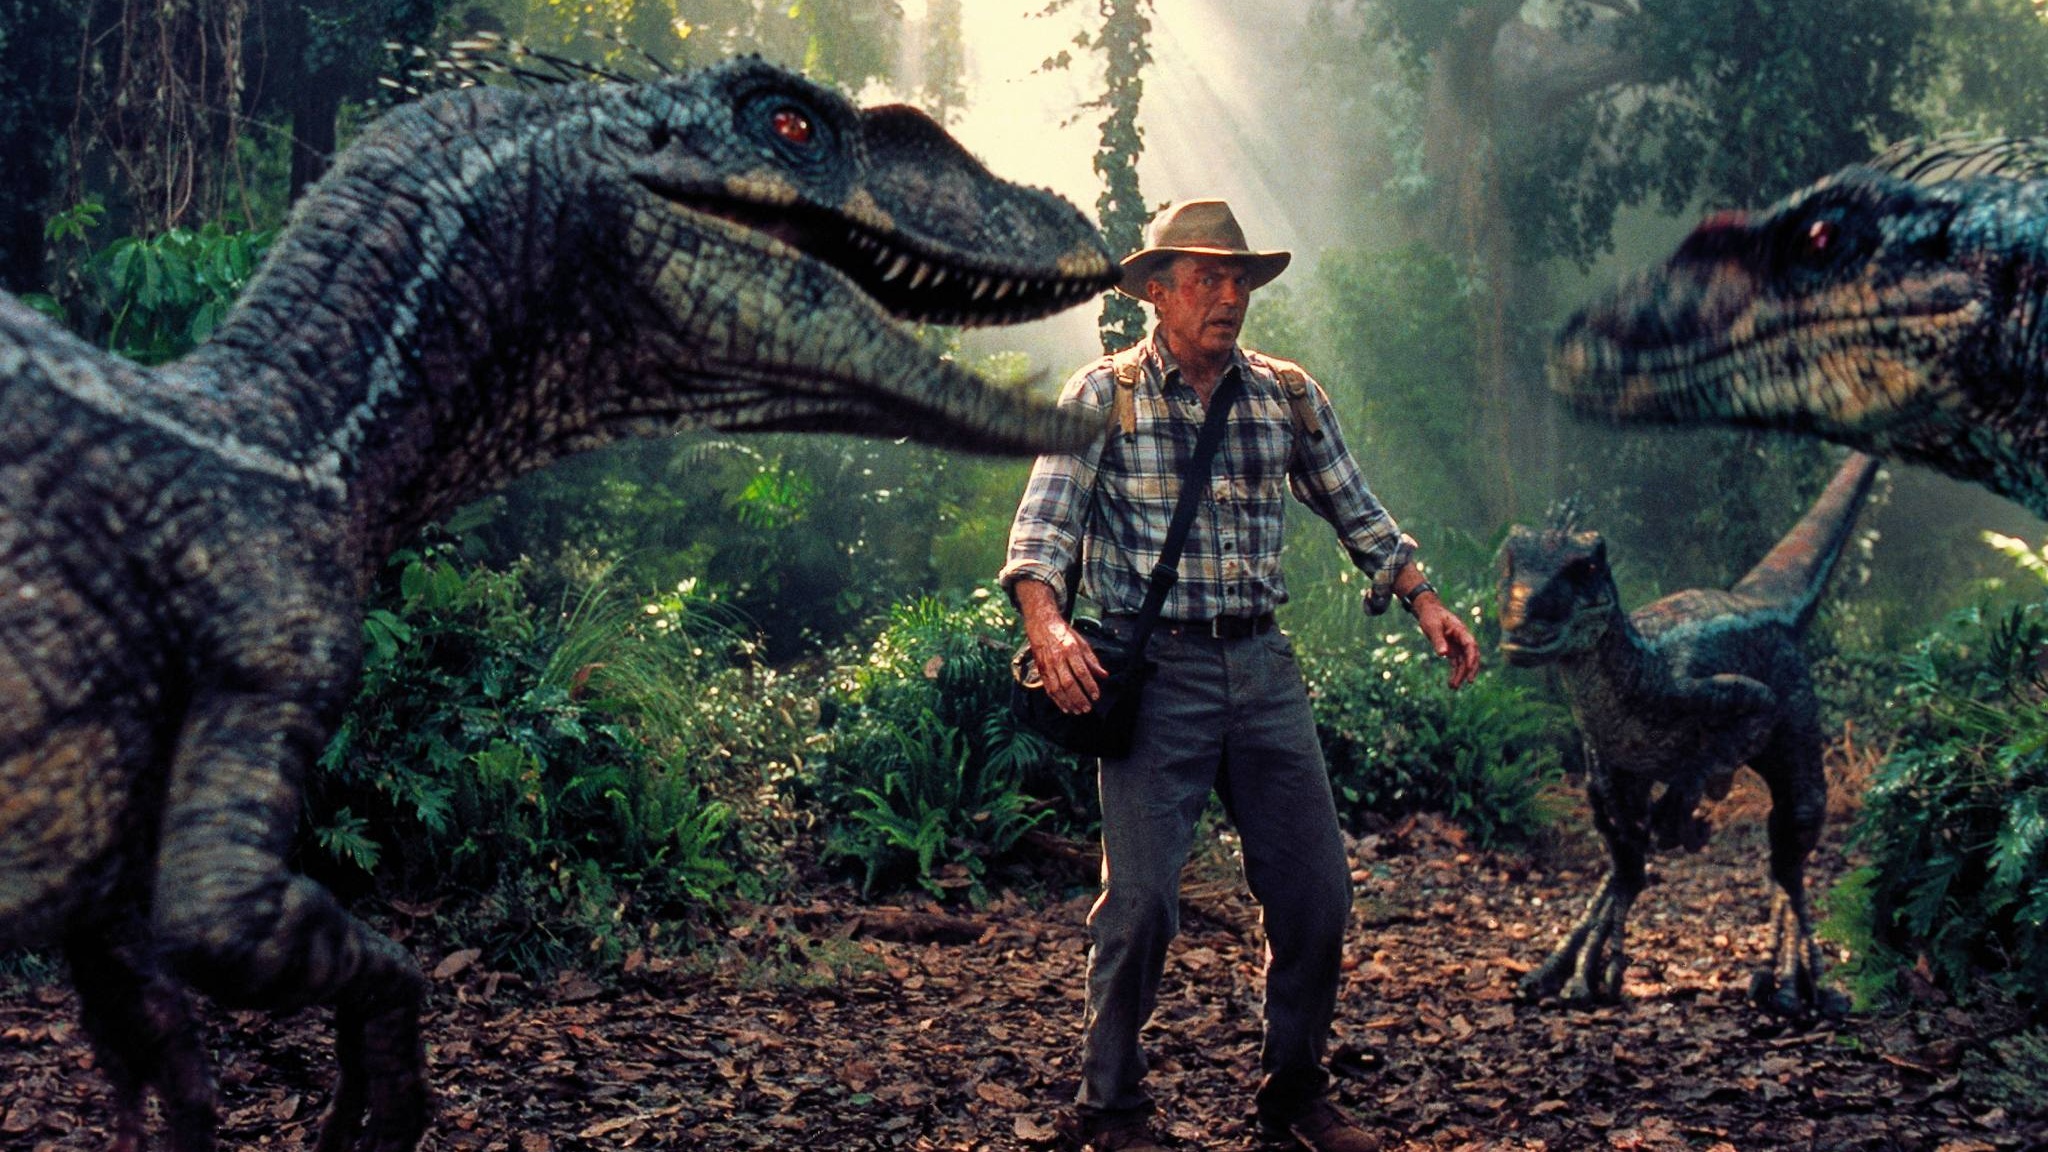 Dr. Grant in Jurassic Park III